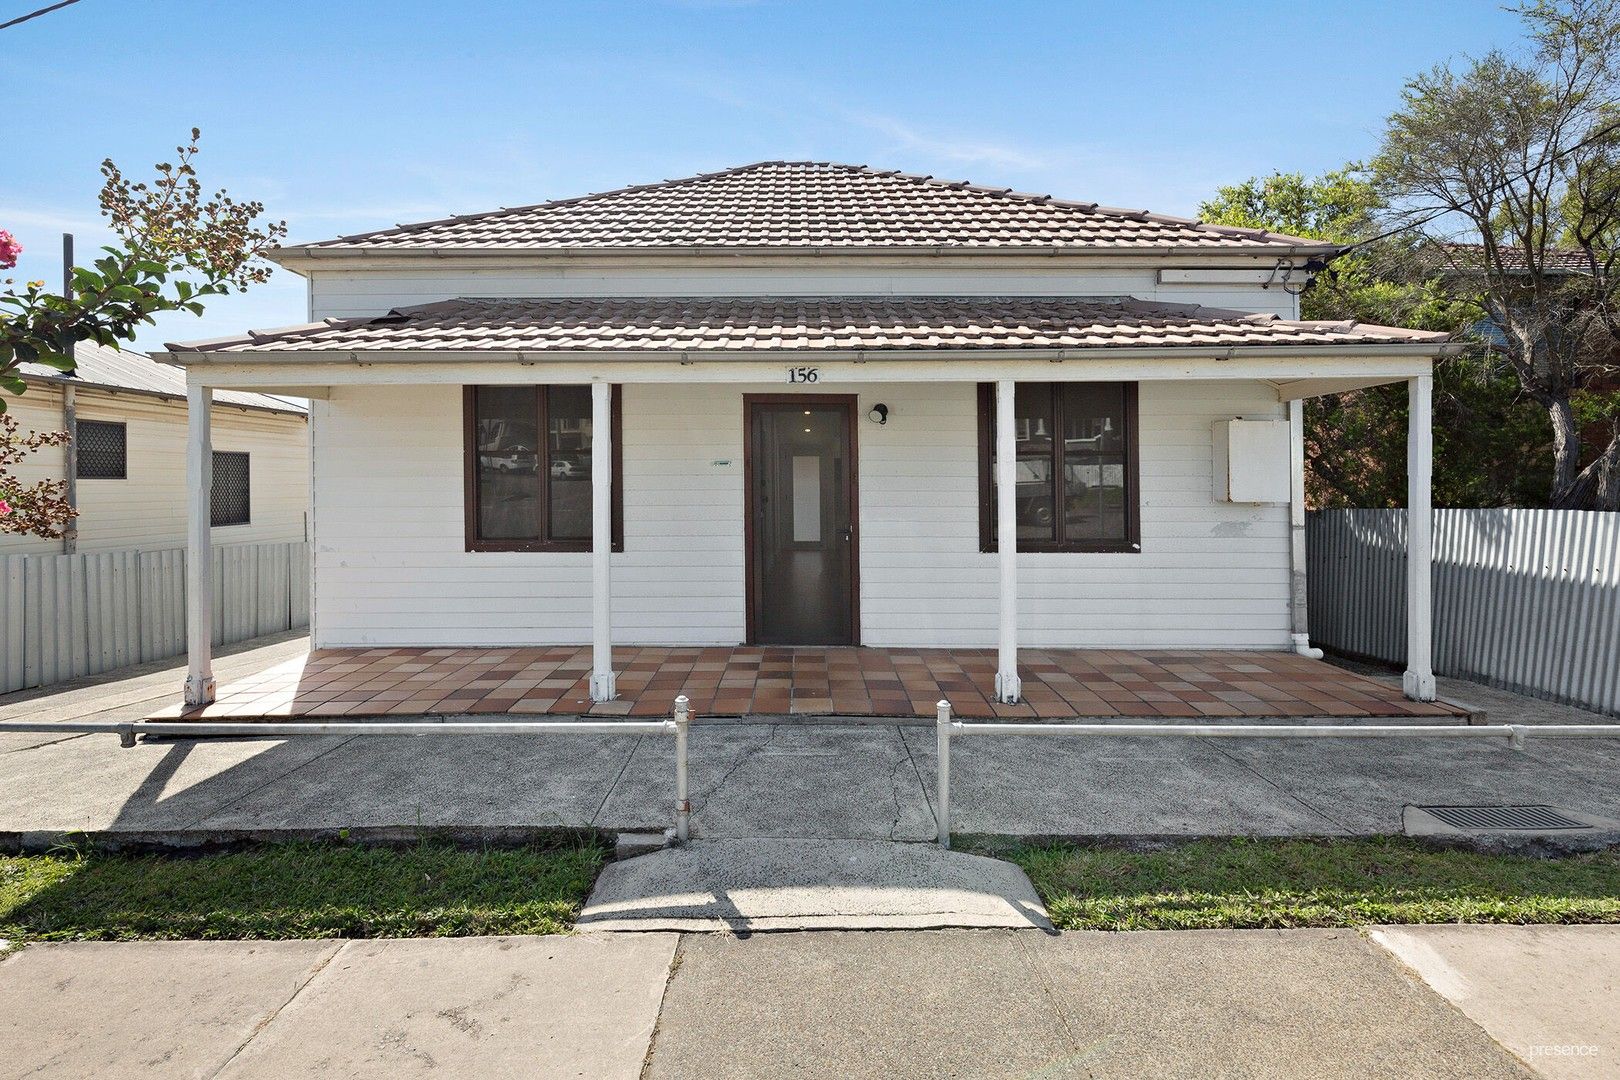 5 bedrooms House in 156 Teralba Road ADAMSTOWN NSW, 2289